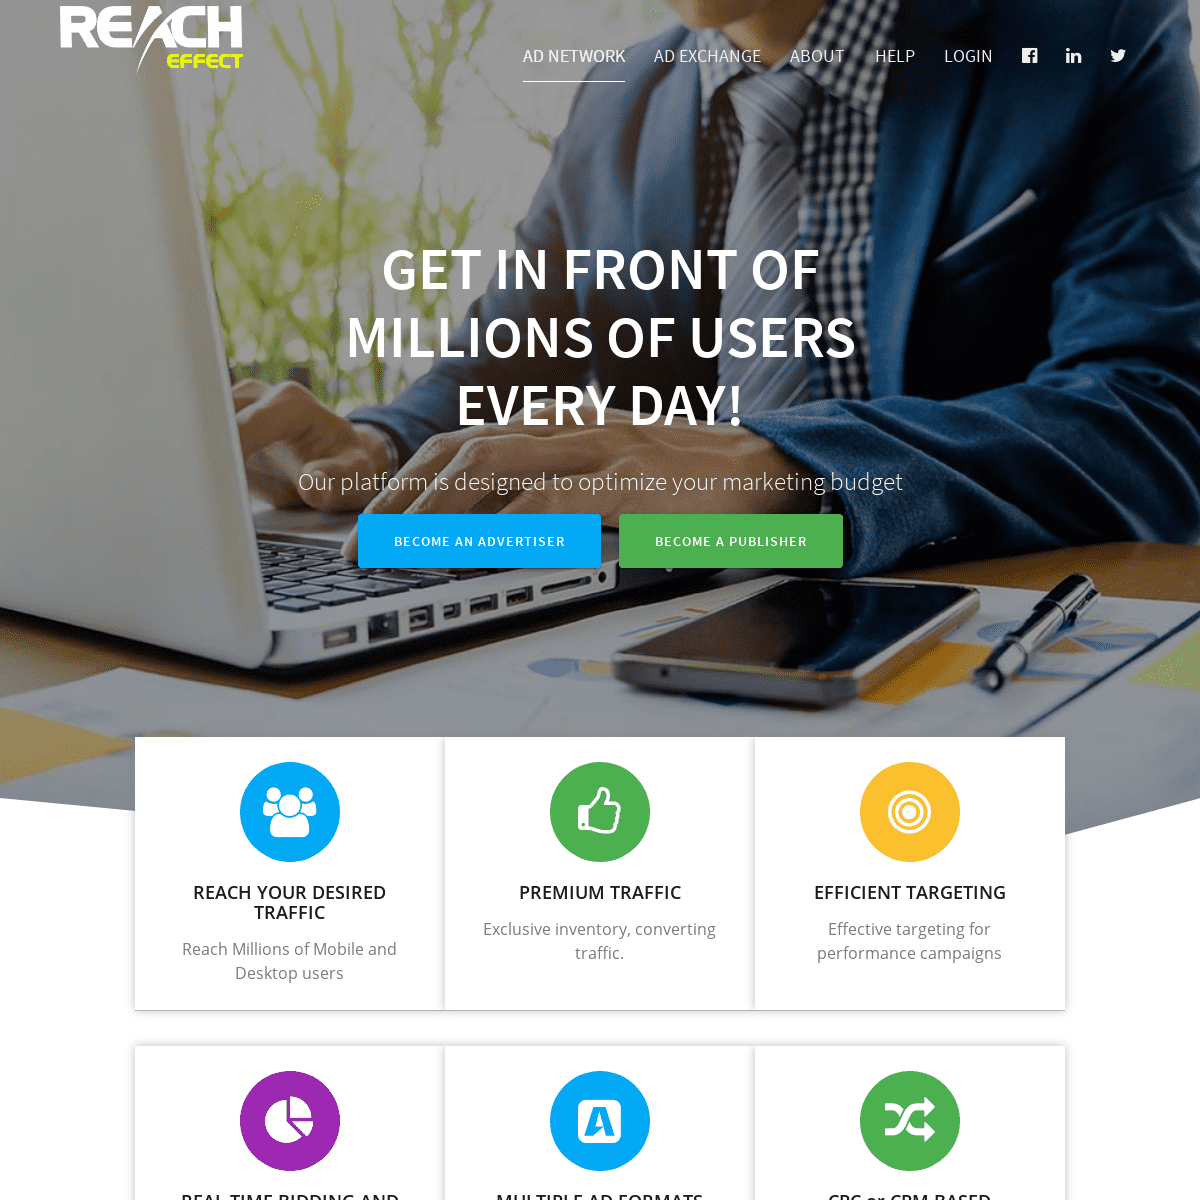 Reacheffect – Non stop converting traffic